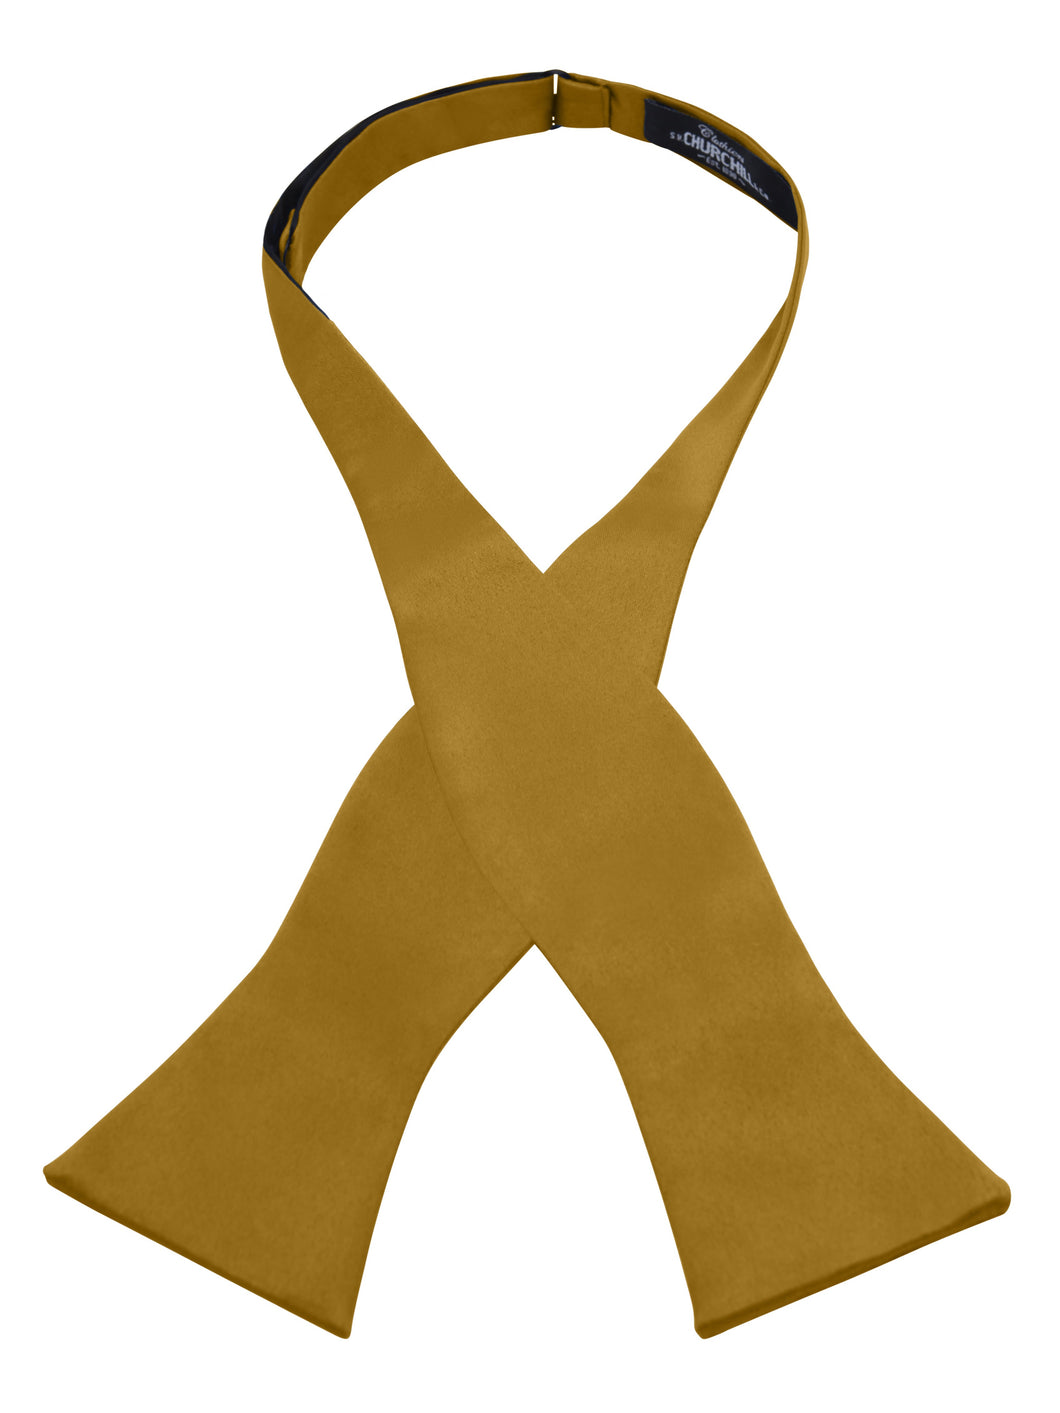 S.H. Churchill & Co. Men's Gold Self-Tie Satin Bow Tie